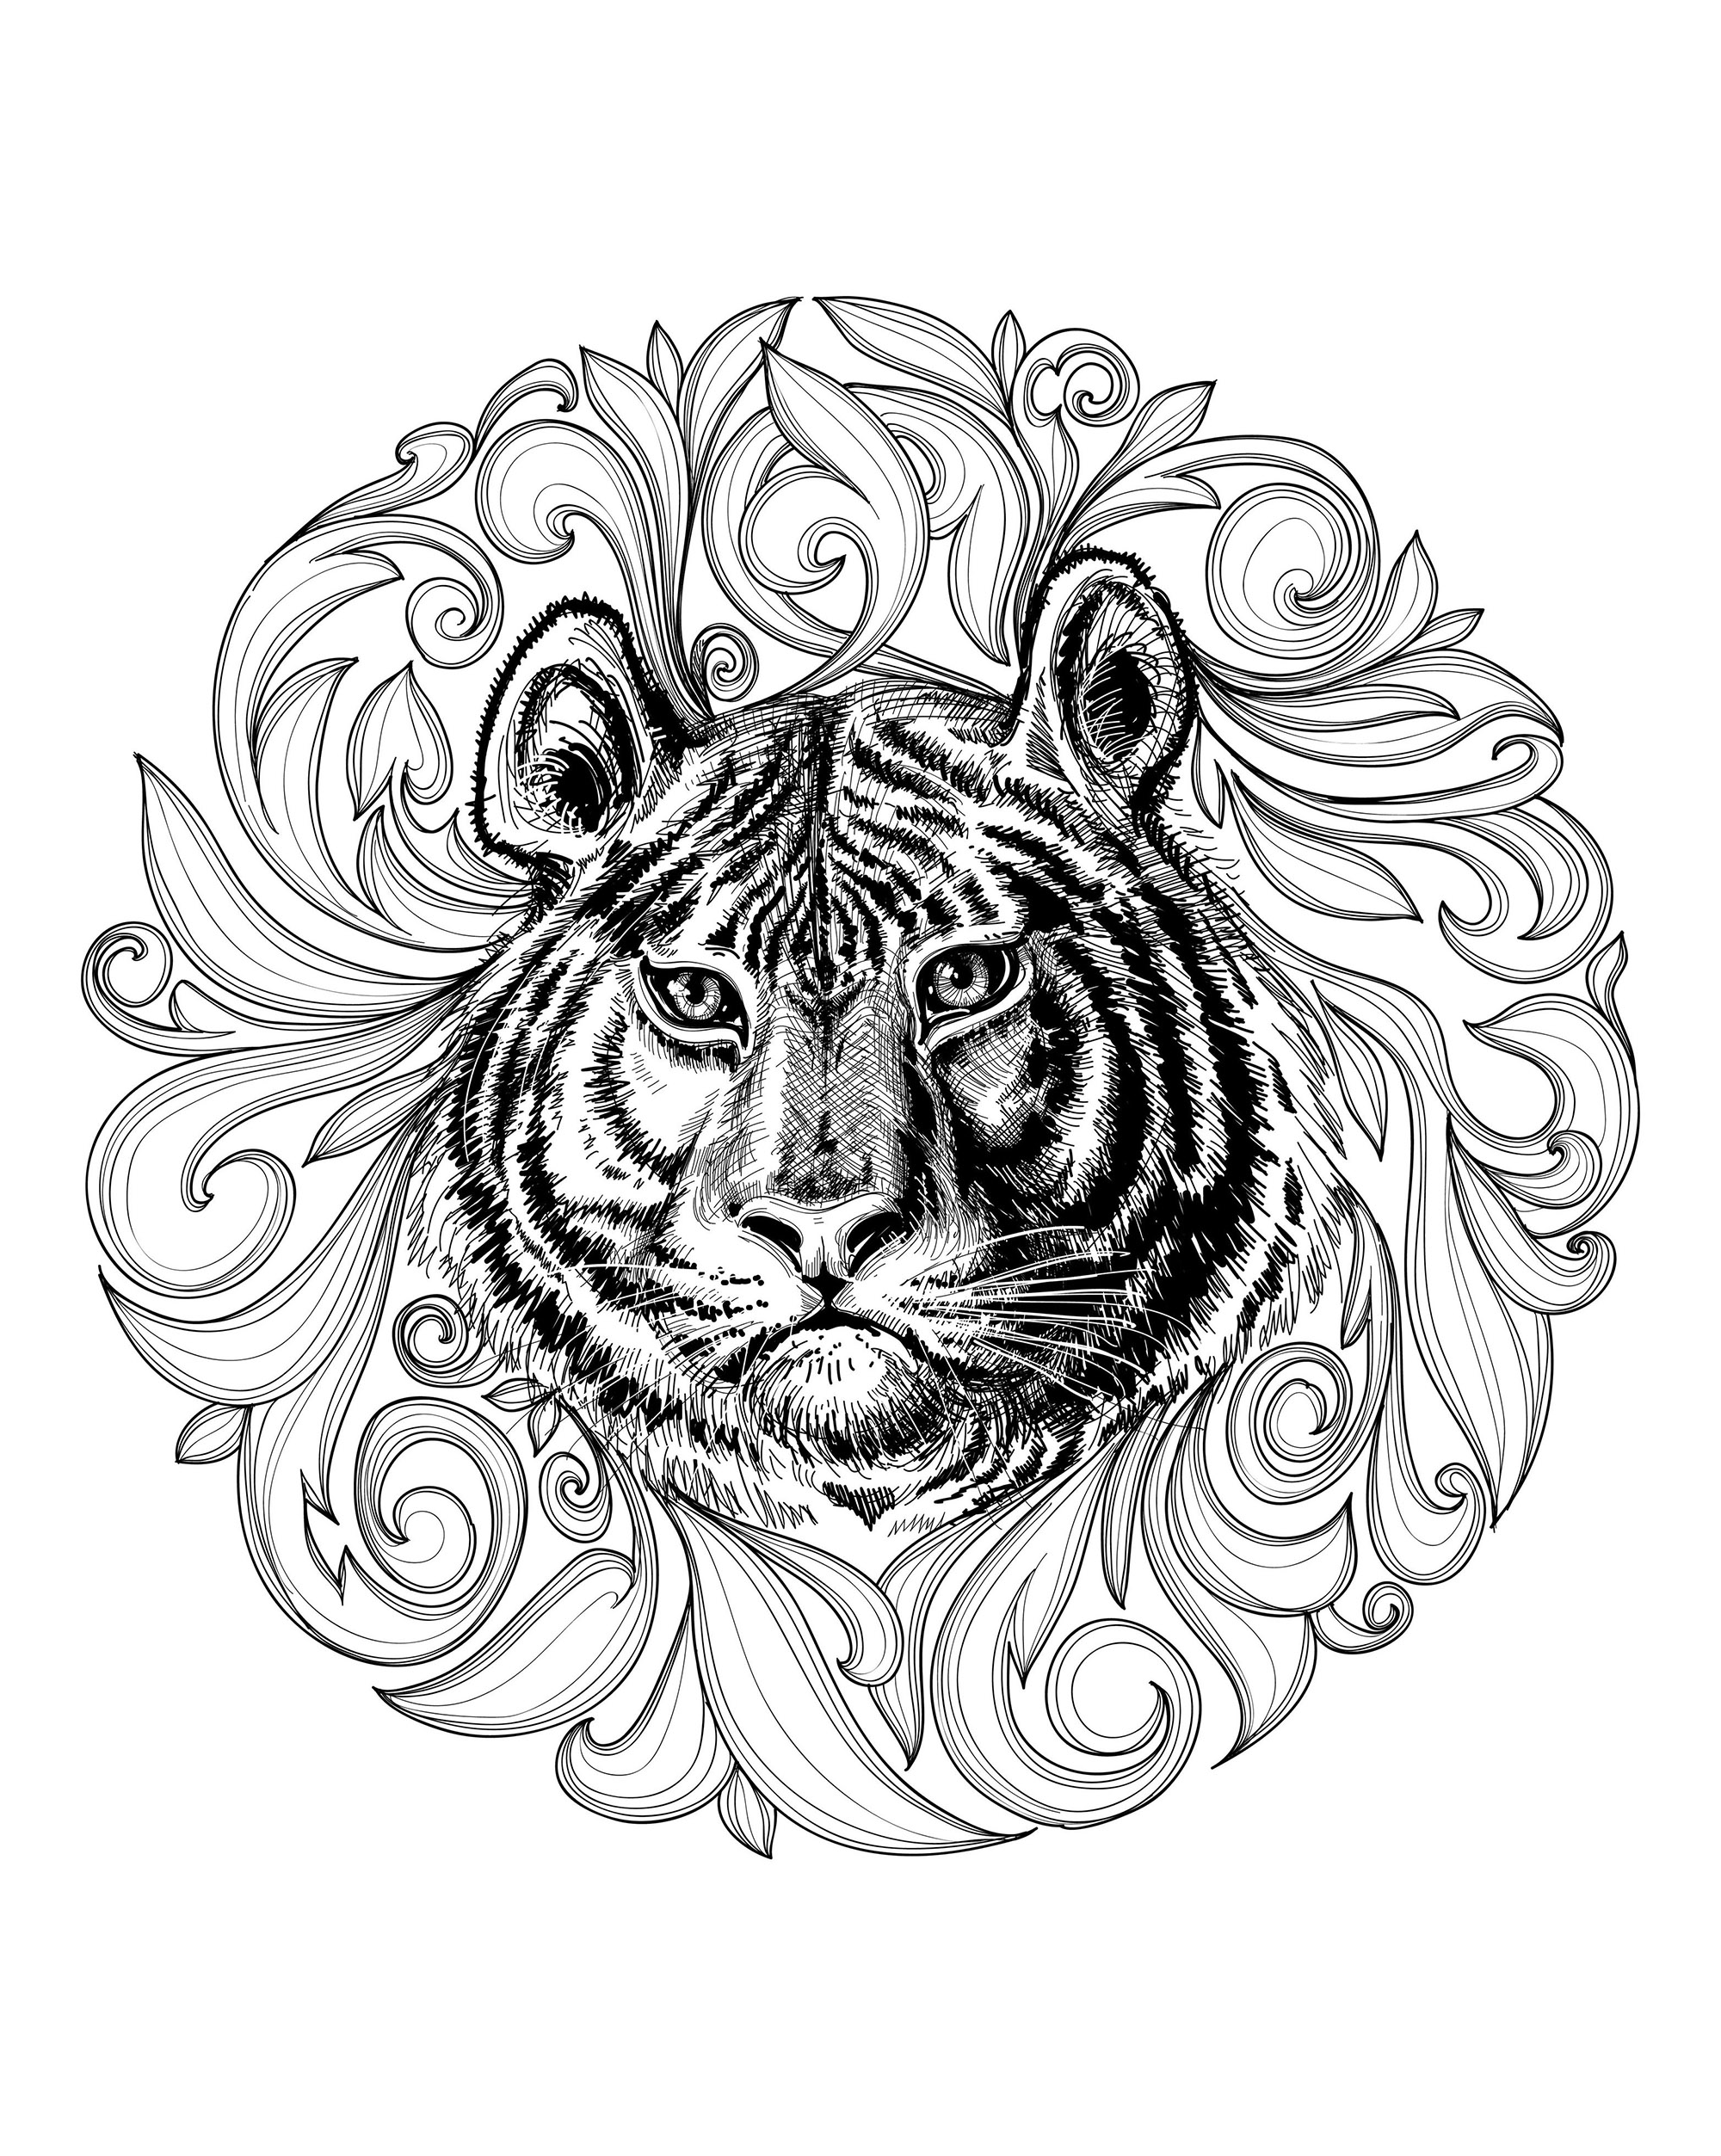 Malbuch Fur Erwachsene  : Tigers - 2, Künstler : torky #NOLINK   Quelle : 123rf